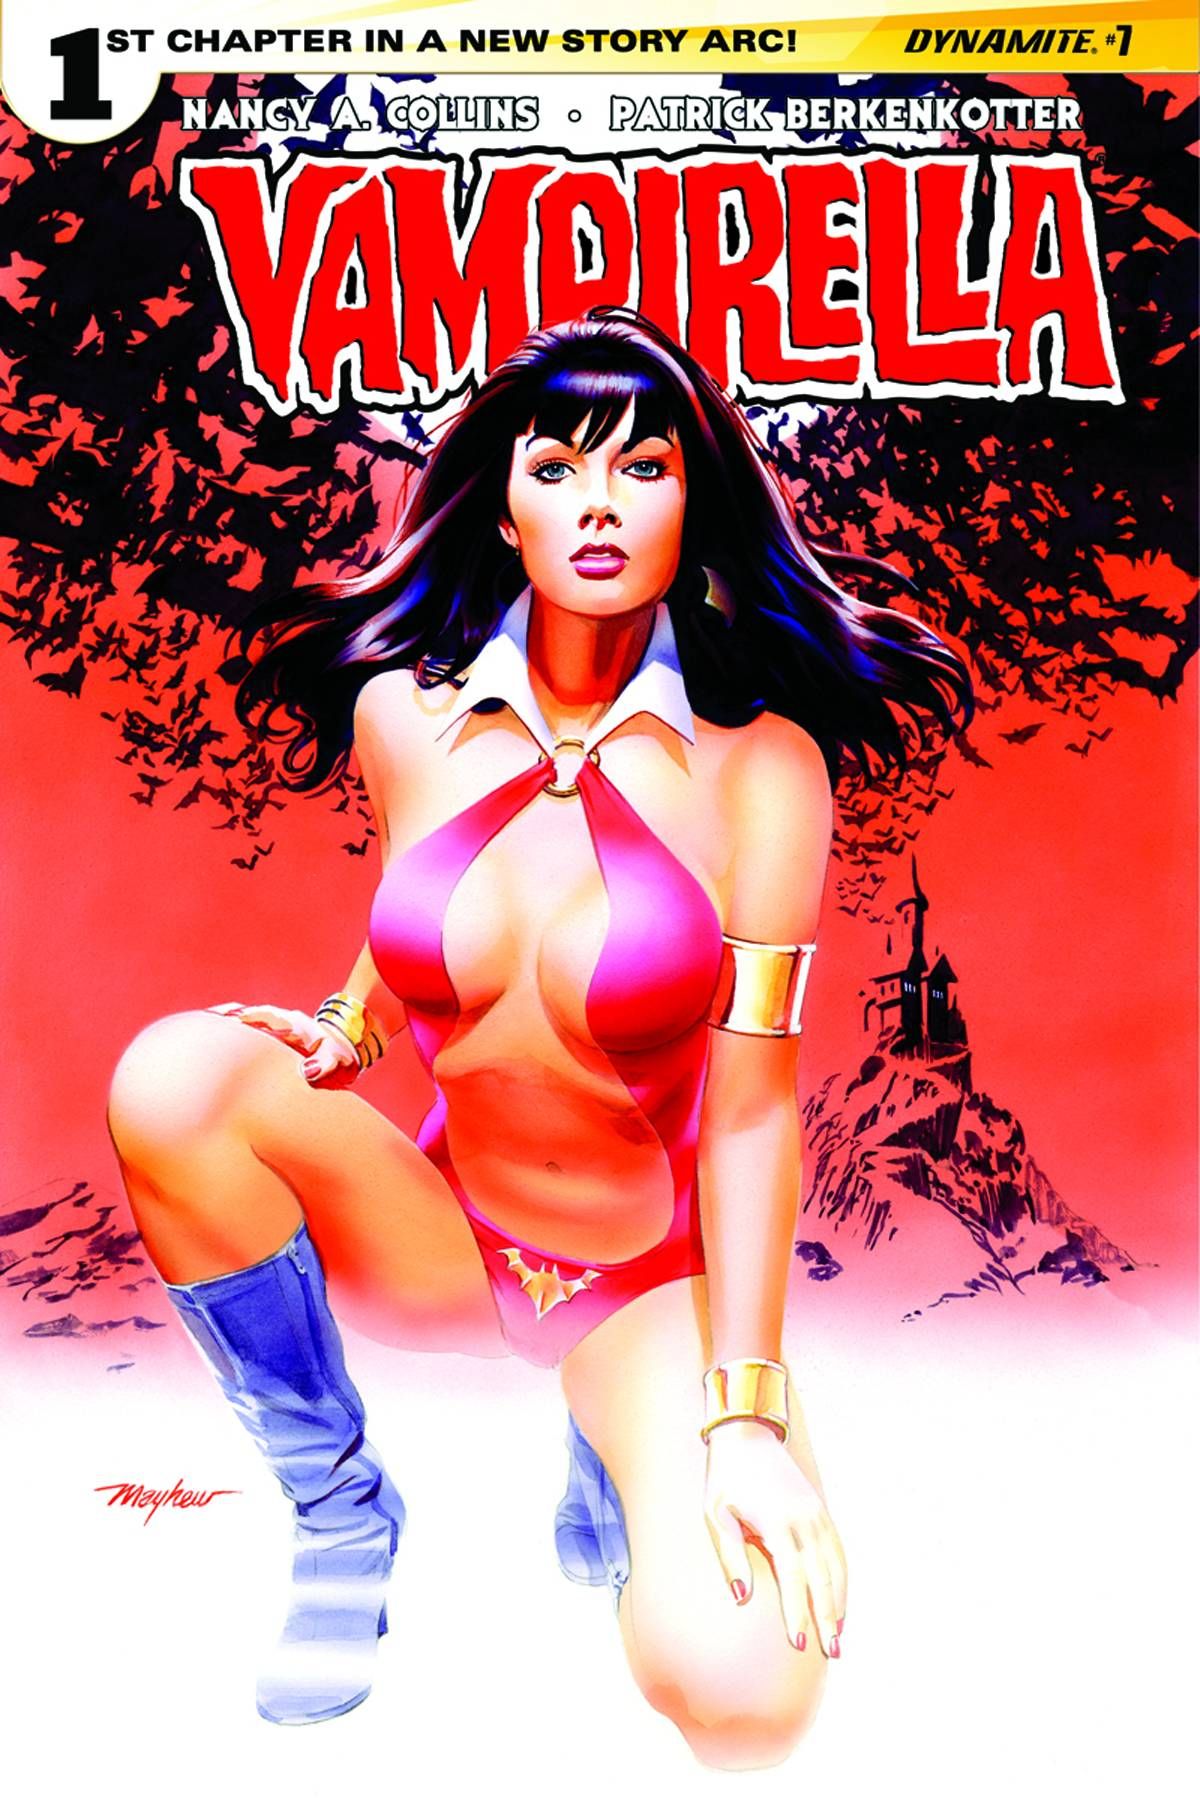 Vampirella #7 Comic